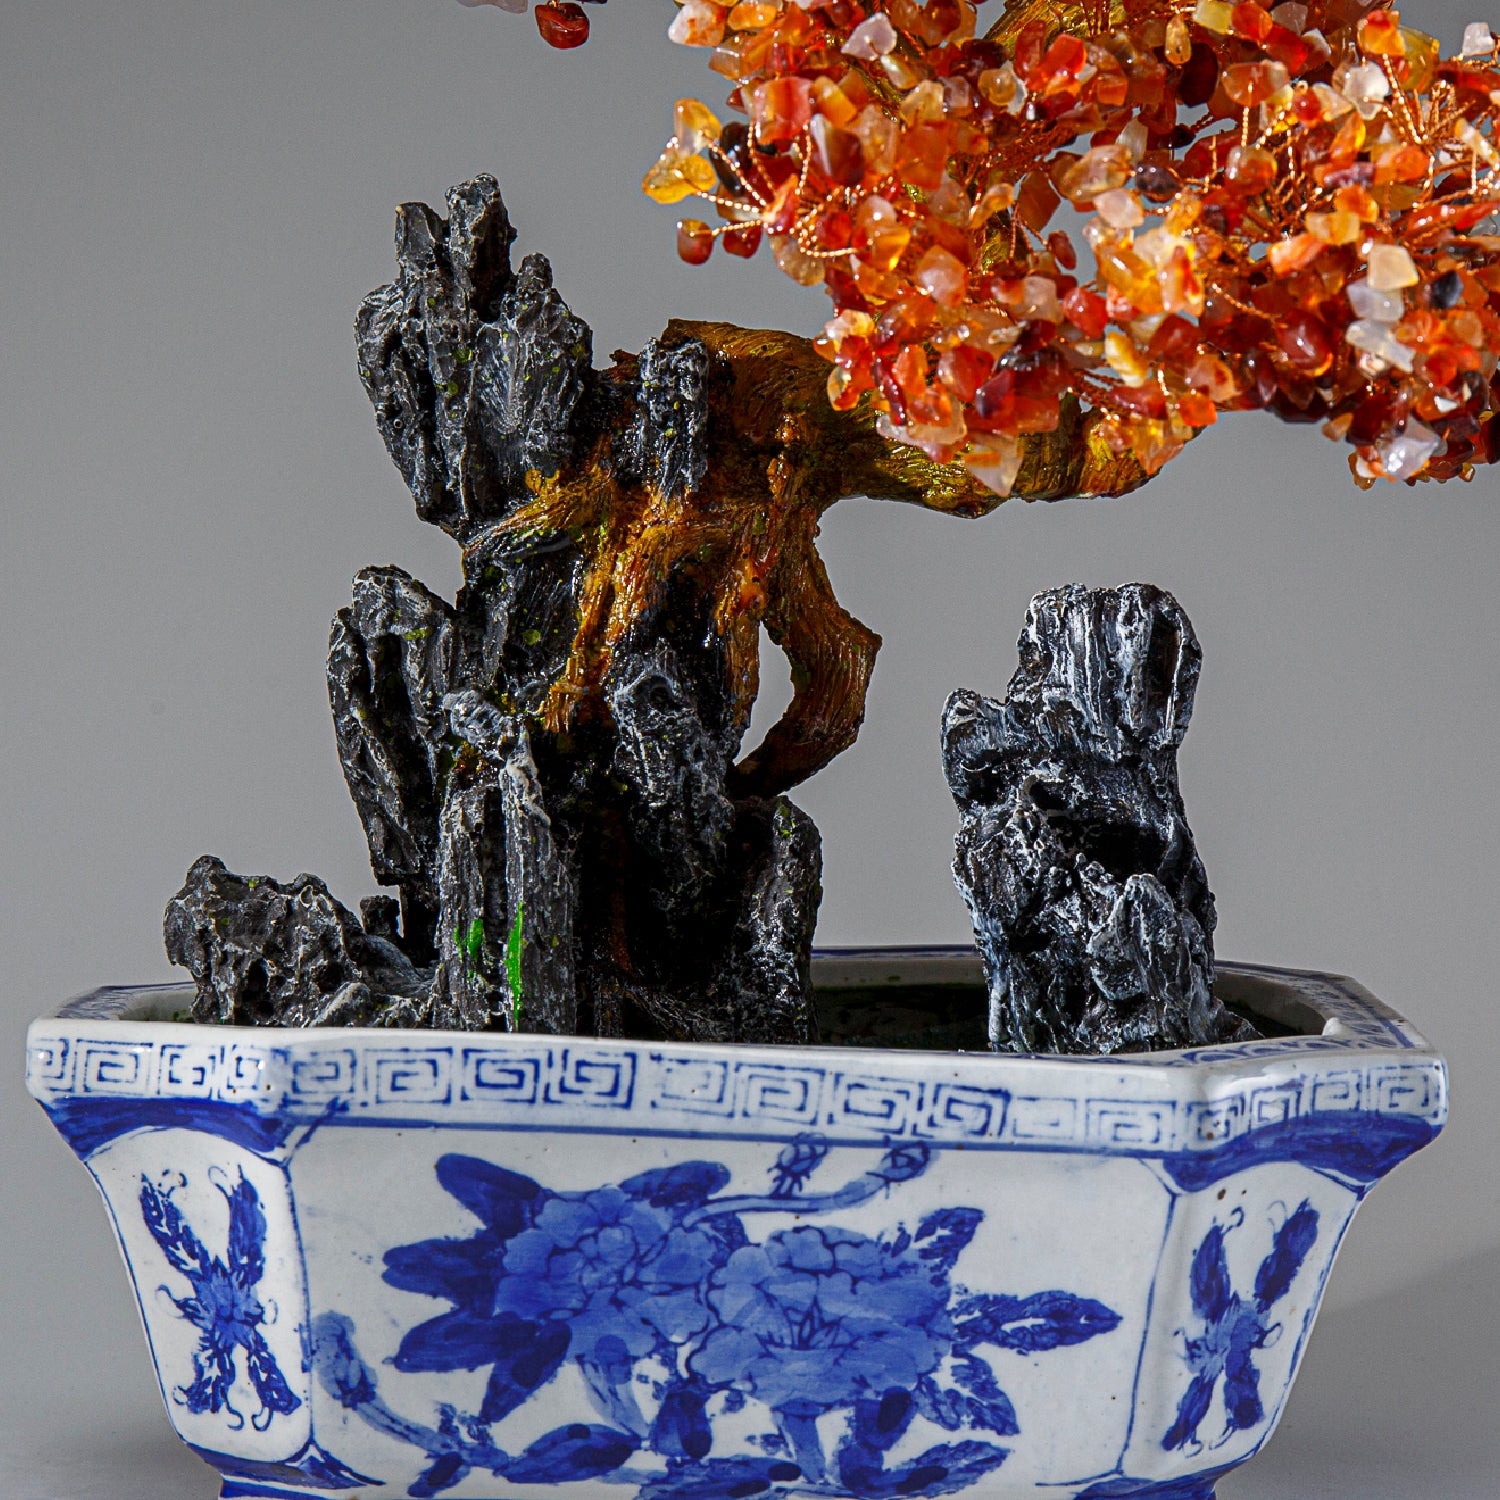 Genuine Carnelian Gemstone Bonsai Tree in Square Ceramic Pot (13” Tall)